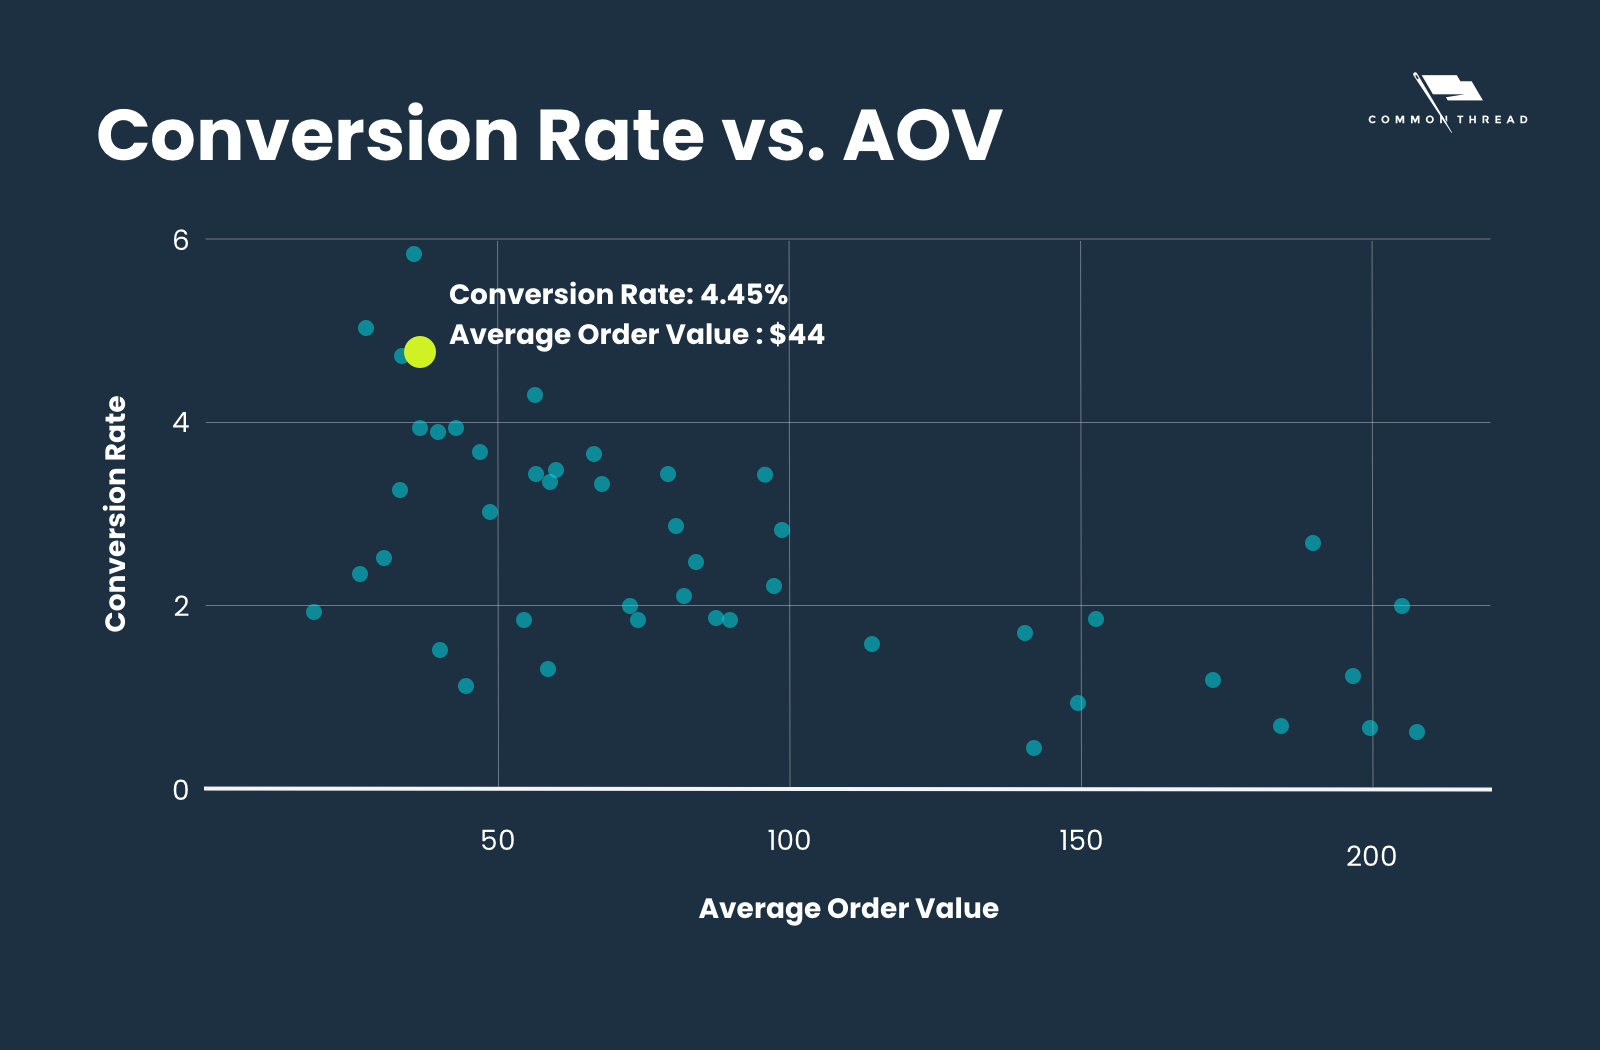 Conversion Rate vs. Average Order Value (AOV) scatter plot for digital marketing planning